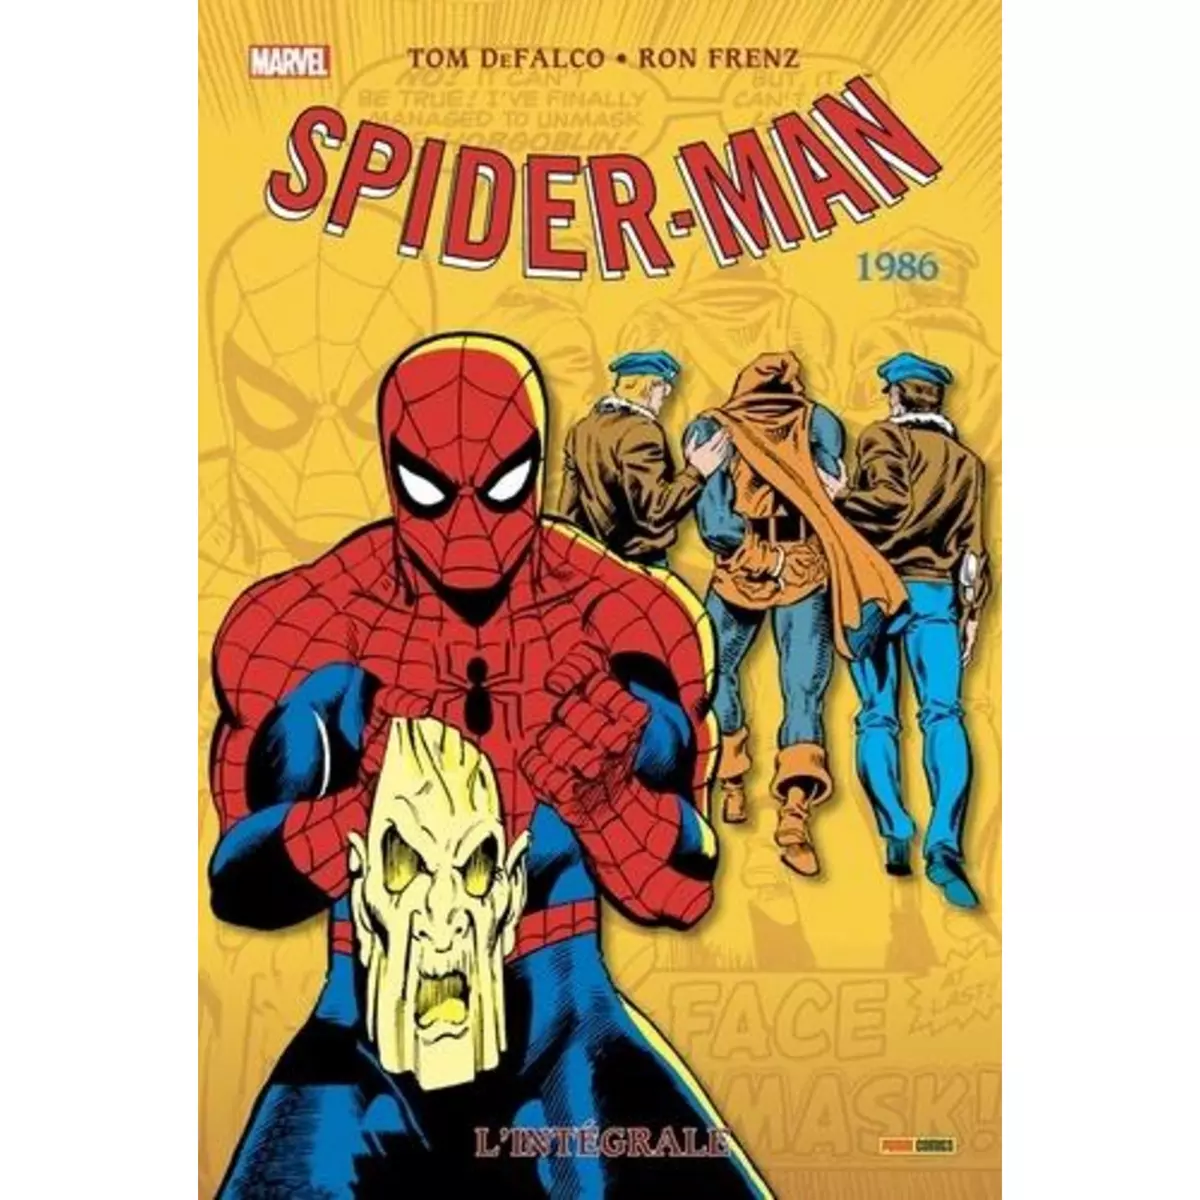  SPIDER-MAN L'INTEGRALE : 1986, DeFalco Tom